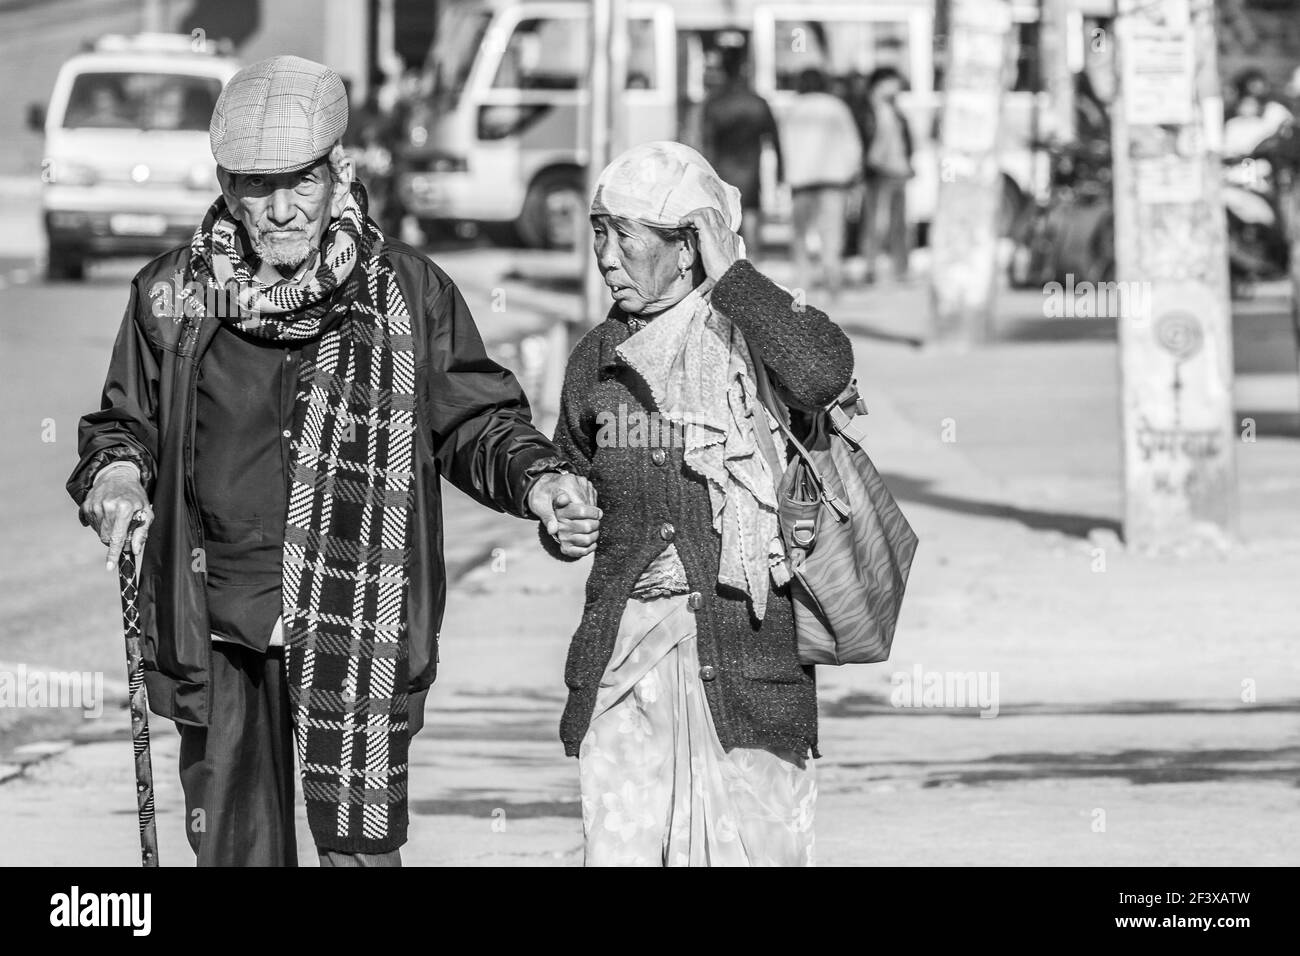 Pokhara, Nepal - November 21, 2015: Elderly couple walking on the street in Pokhara, Nepal Stock Photo